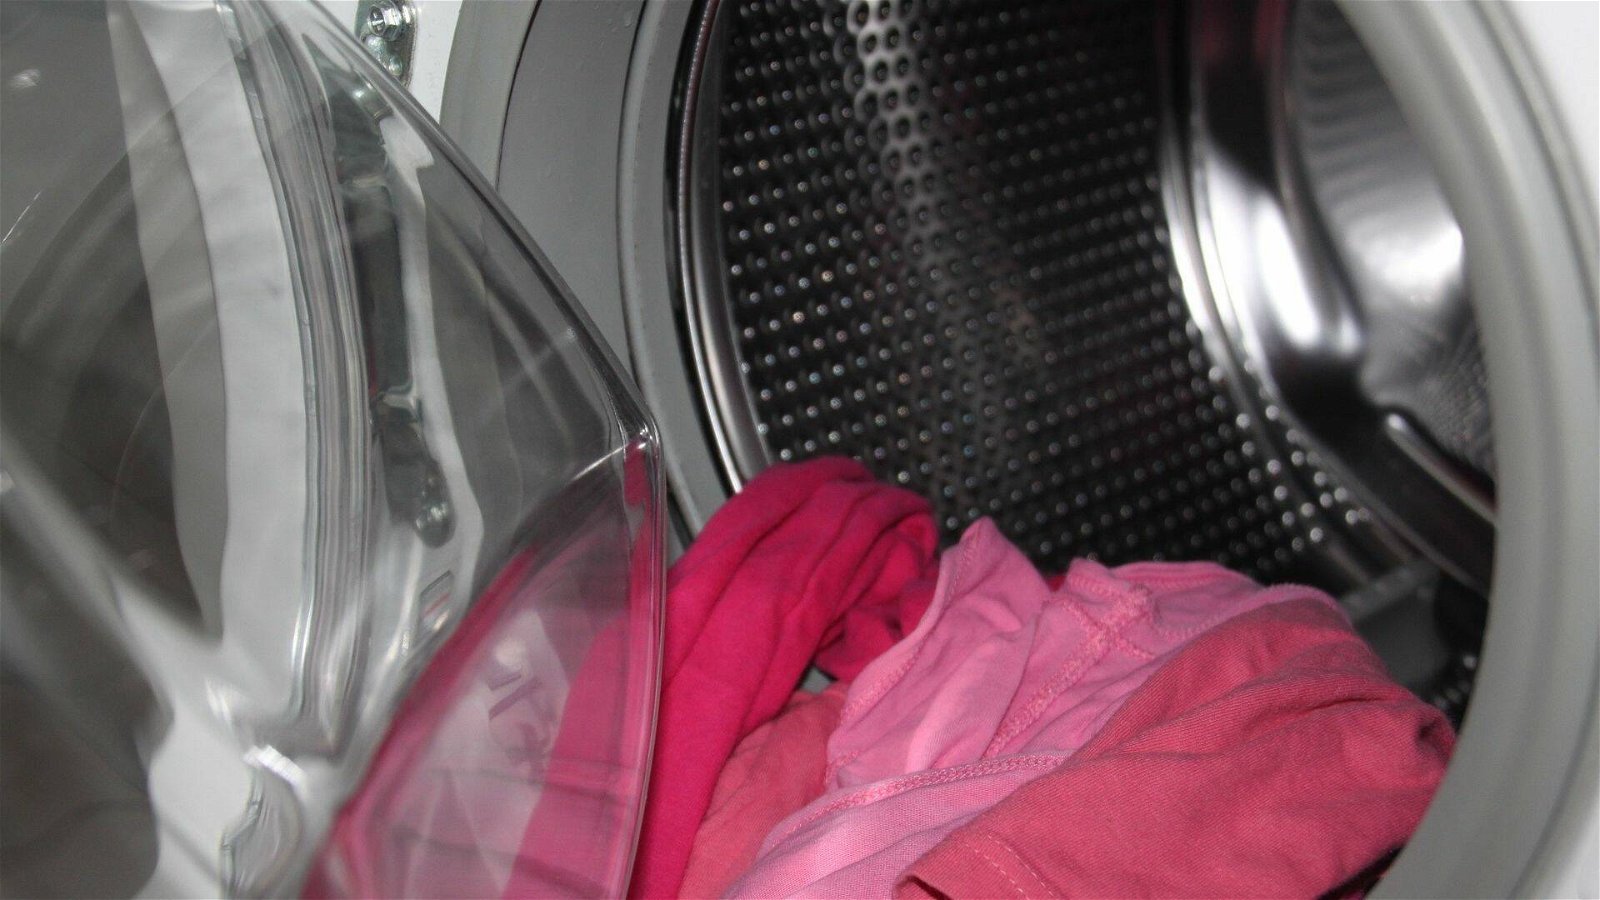 Immagine di Follia eBay! Super prezzo per una lavatrice di classe A da 9 kg!